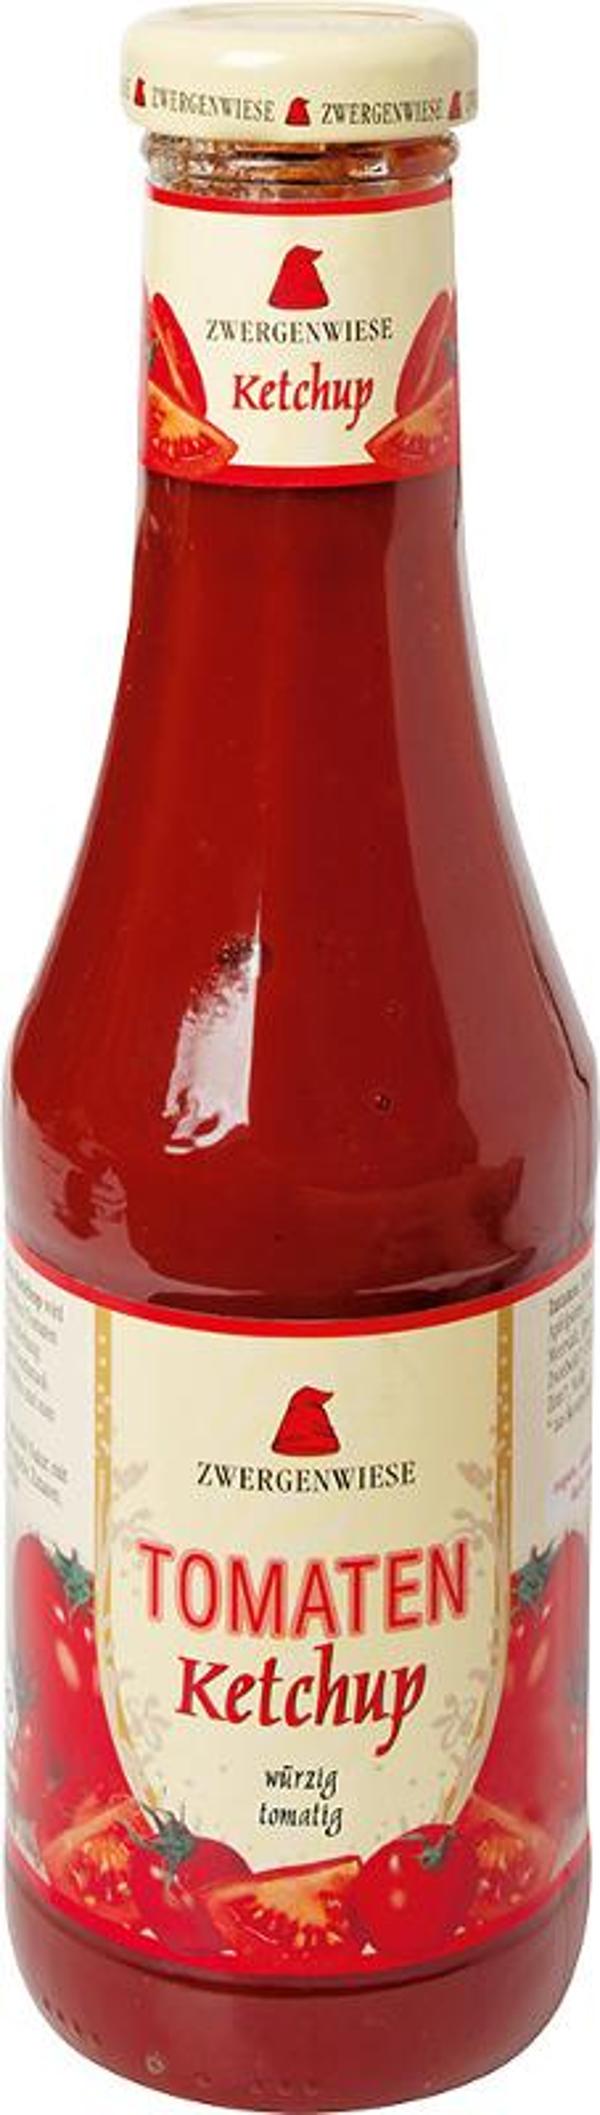 Produktfoto zu Tomaten-Ketchup, 500ml